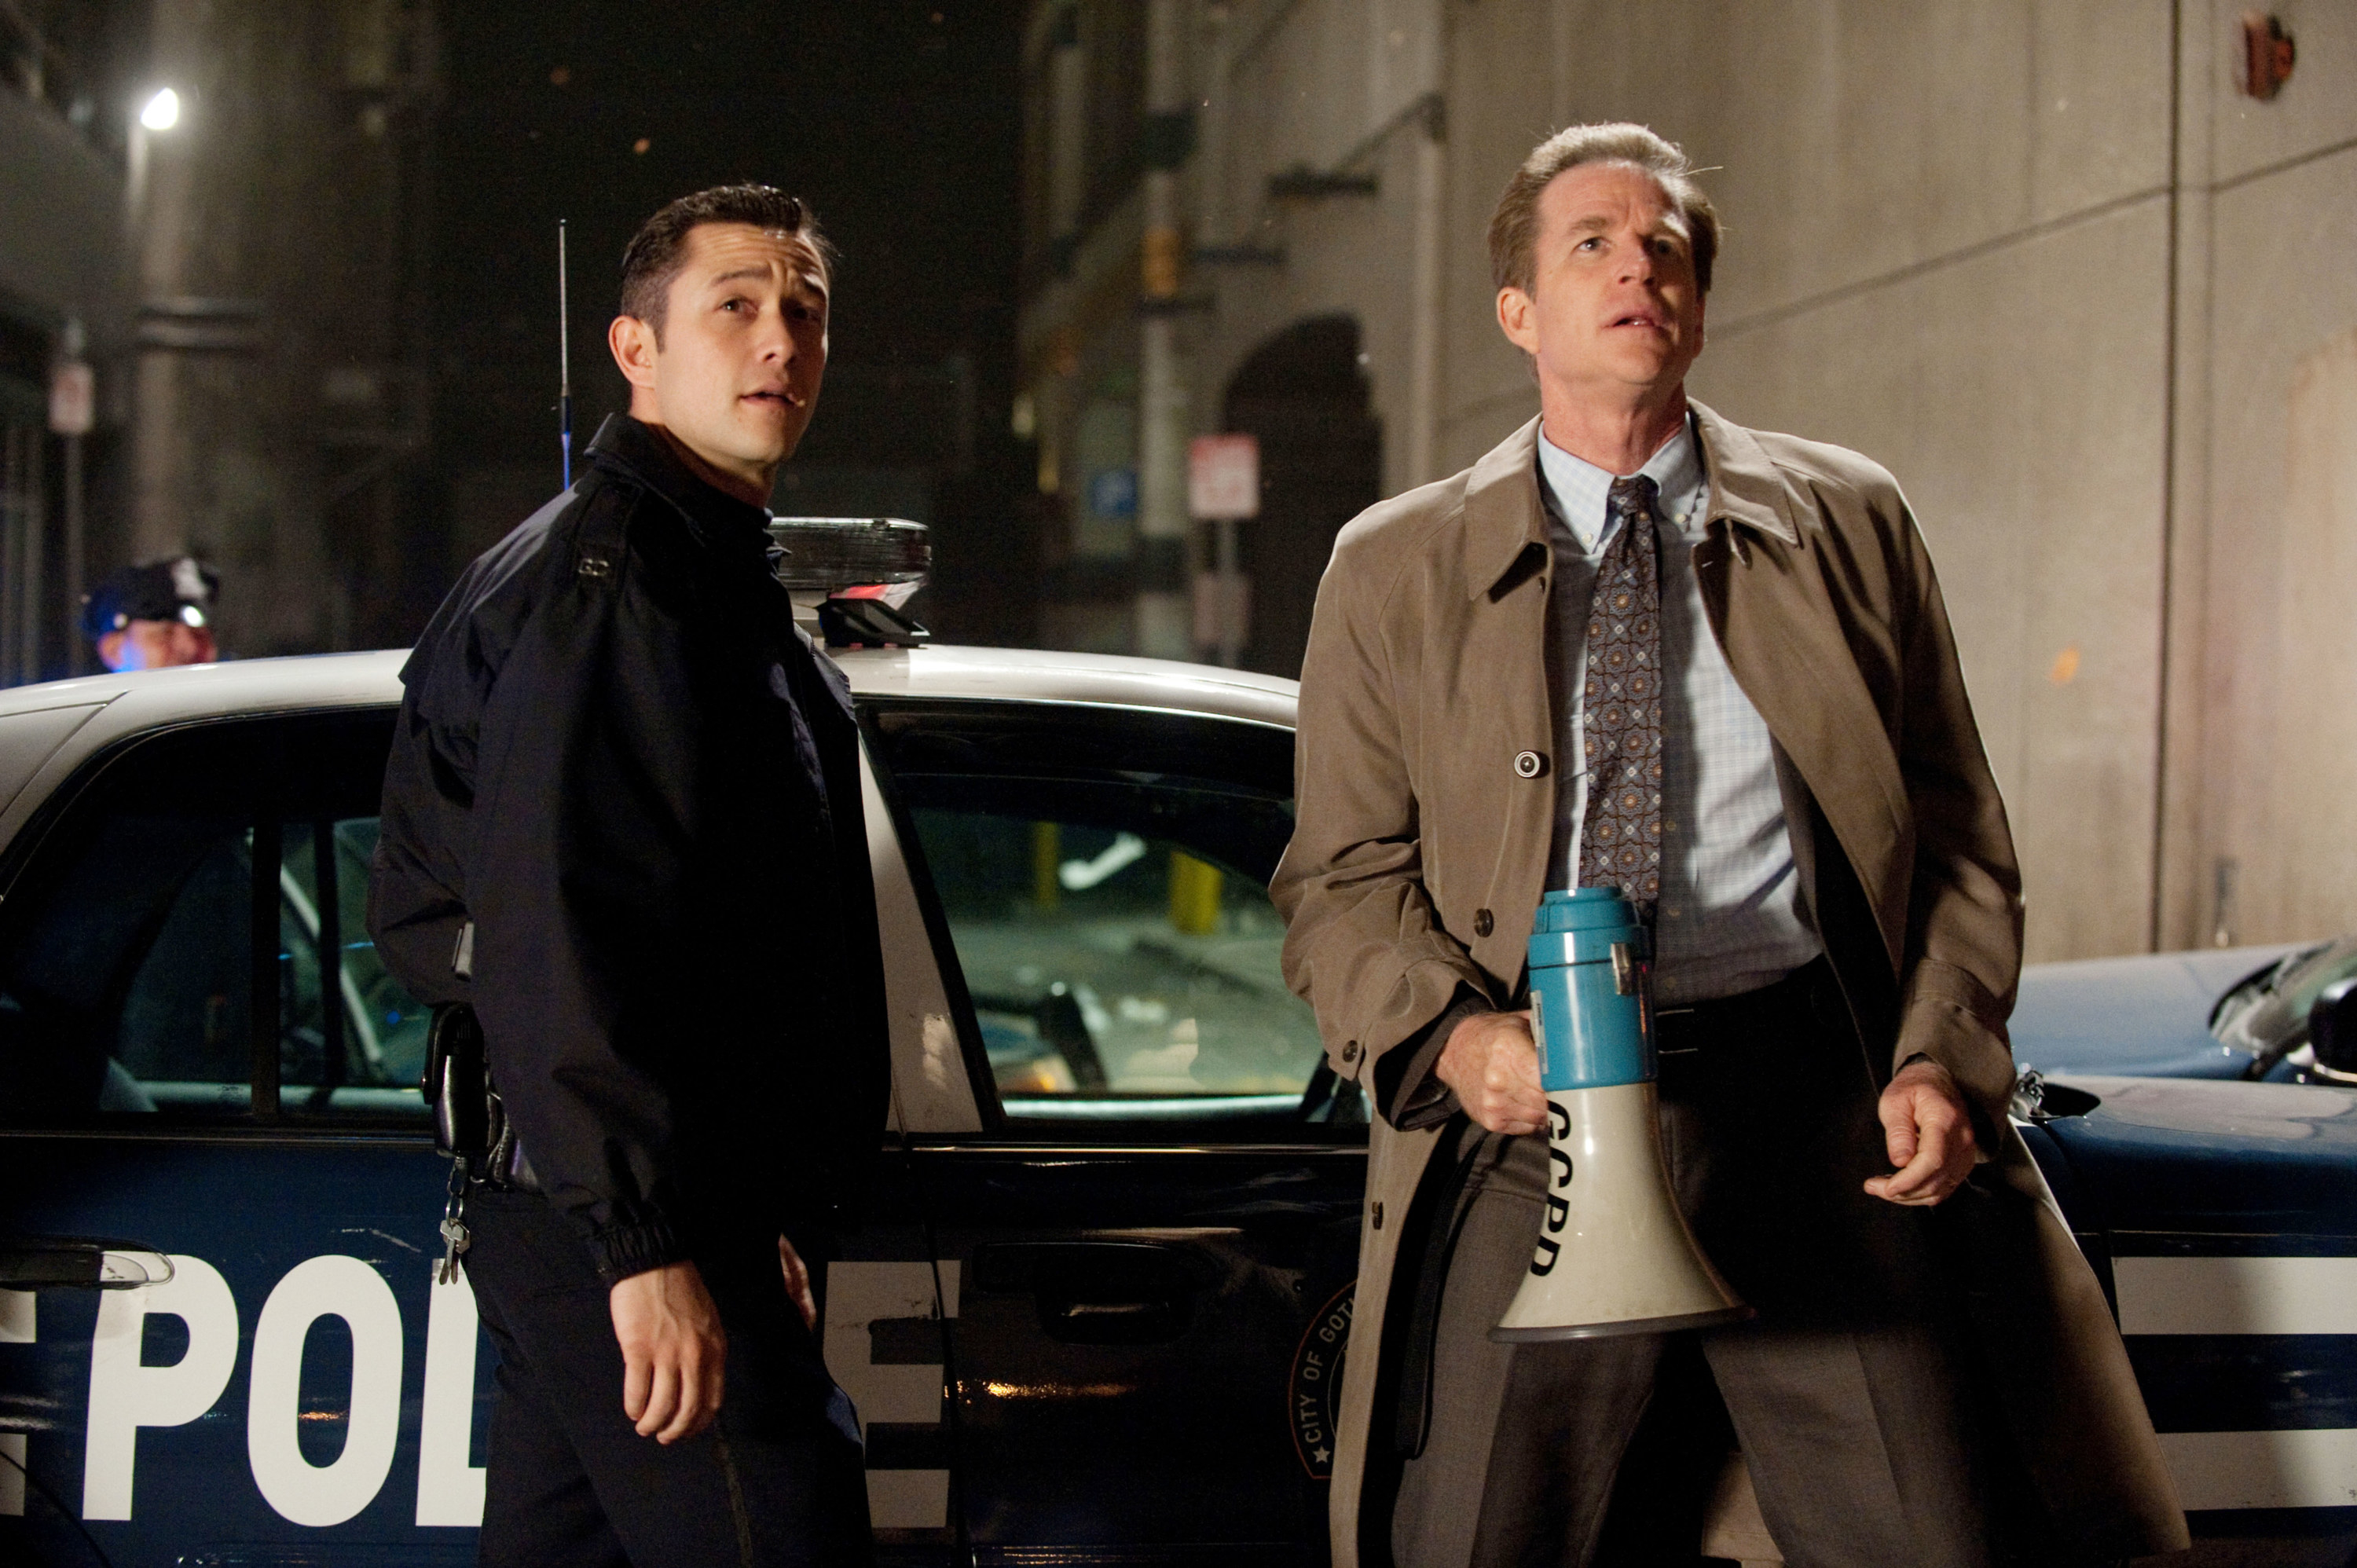 Matthew Modine and Joseph Gordon-Levitt standing in front of a police car